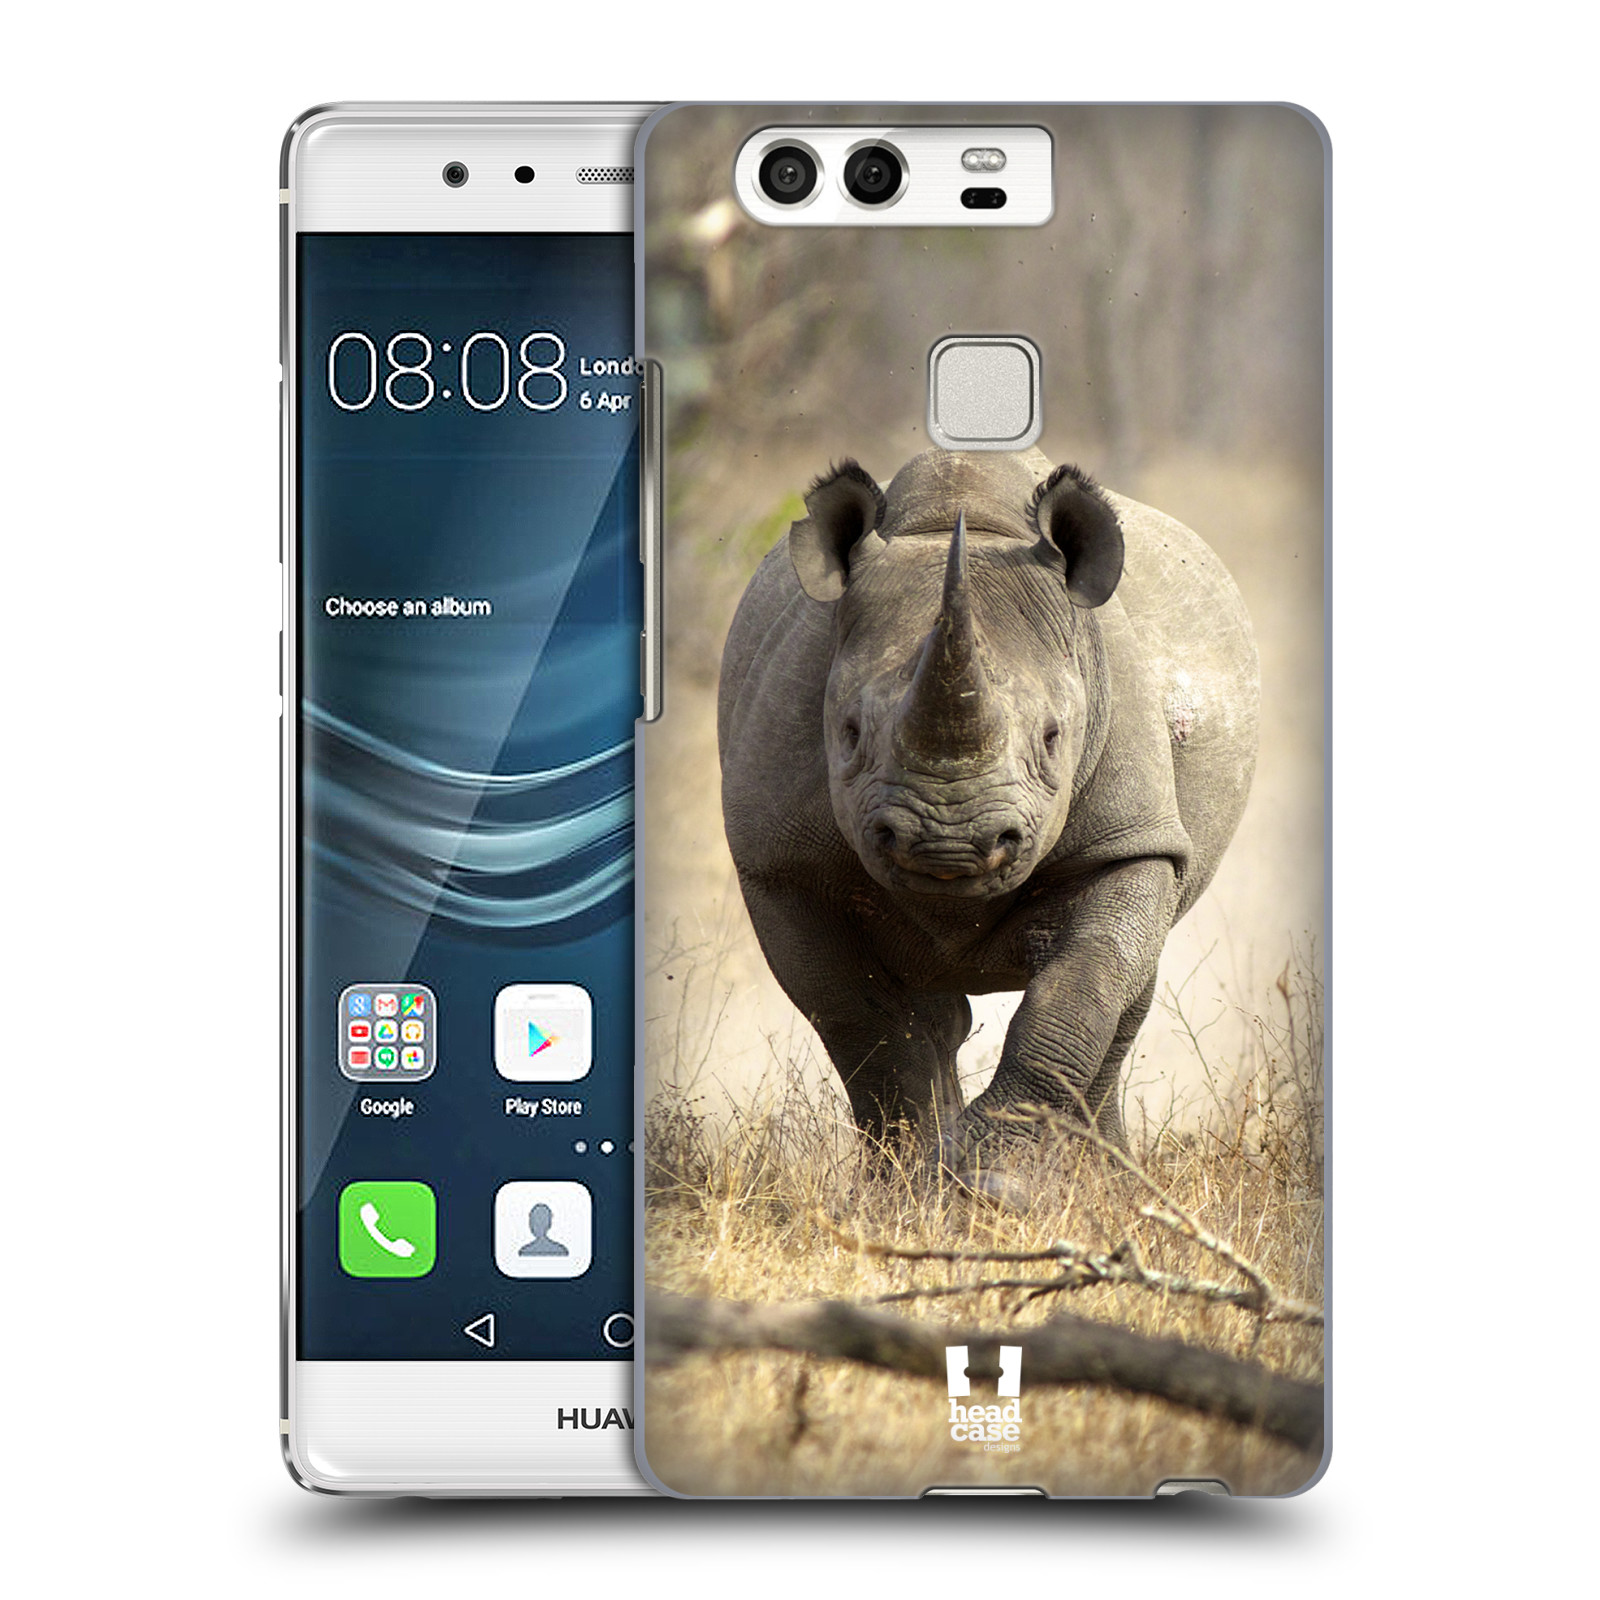 HEAD CASE plastový obal na mobil Huawei P9 / P9 DUAL SIM vzor Divočina, Divoký život a zvířata foto AFRIKA BĚŽÍCÍ NOSOROŽEC